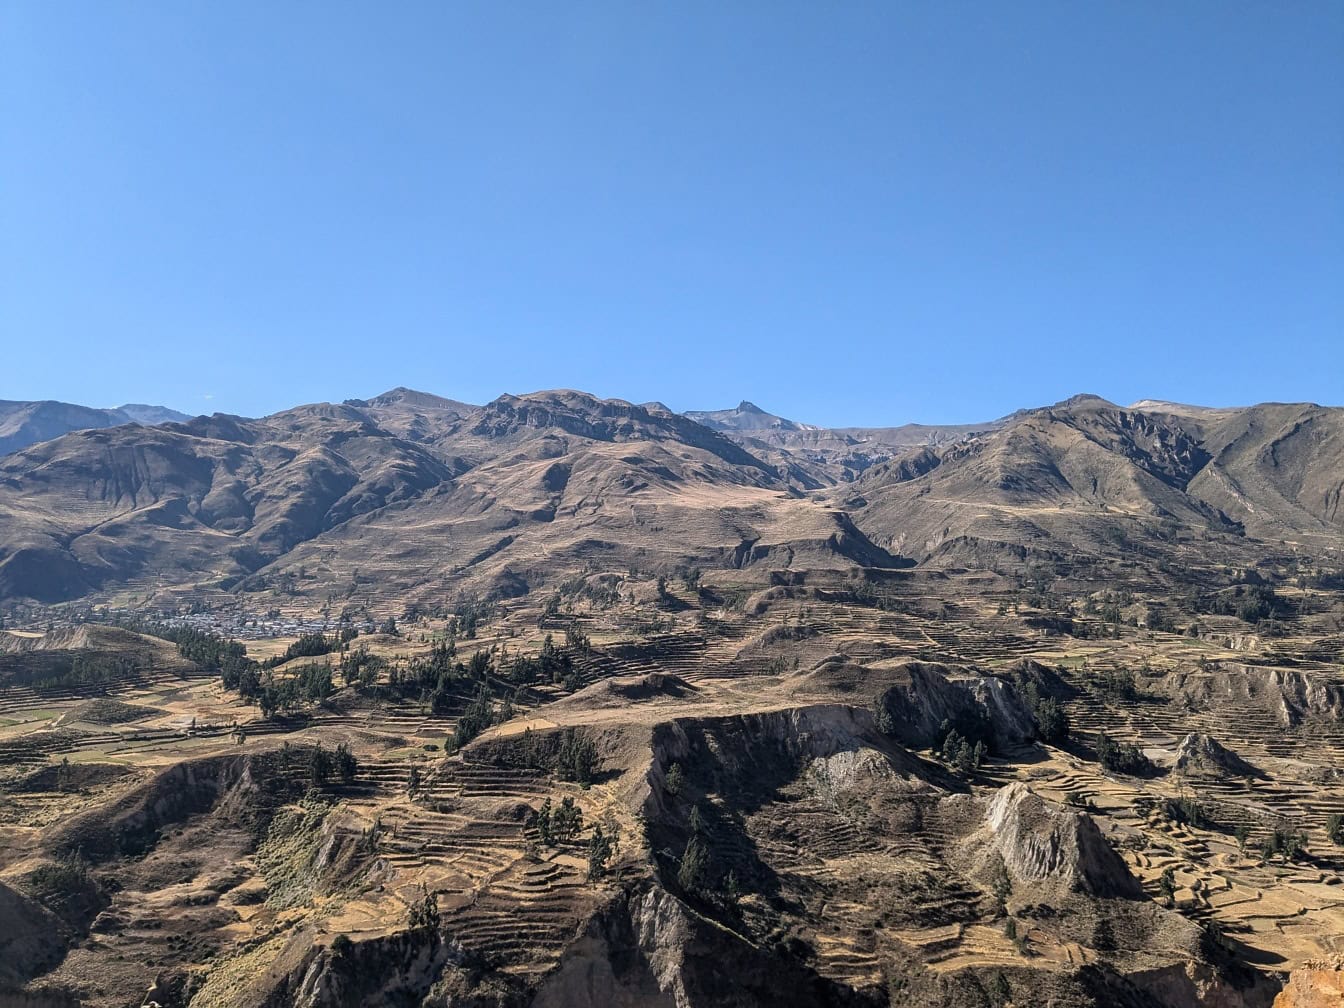 Krajina údolí s kopci v oblasti kaňonu Colca v Peru, malebný výhled na Jižní Ameriku